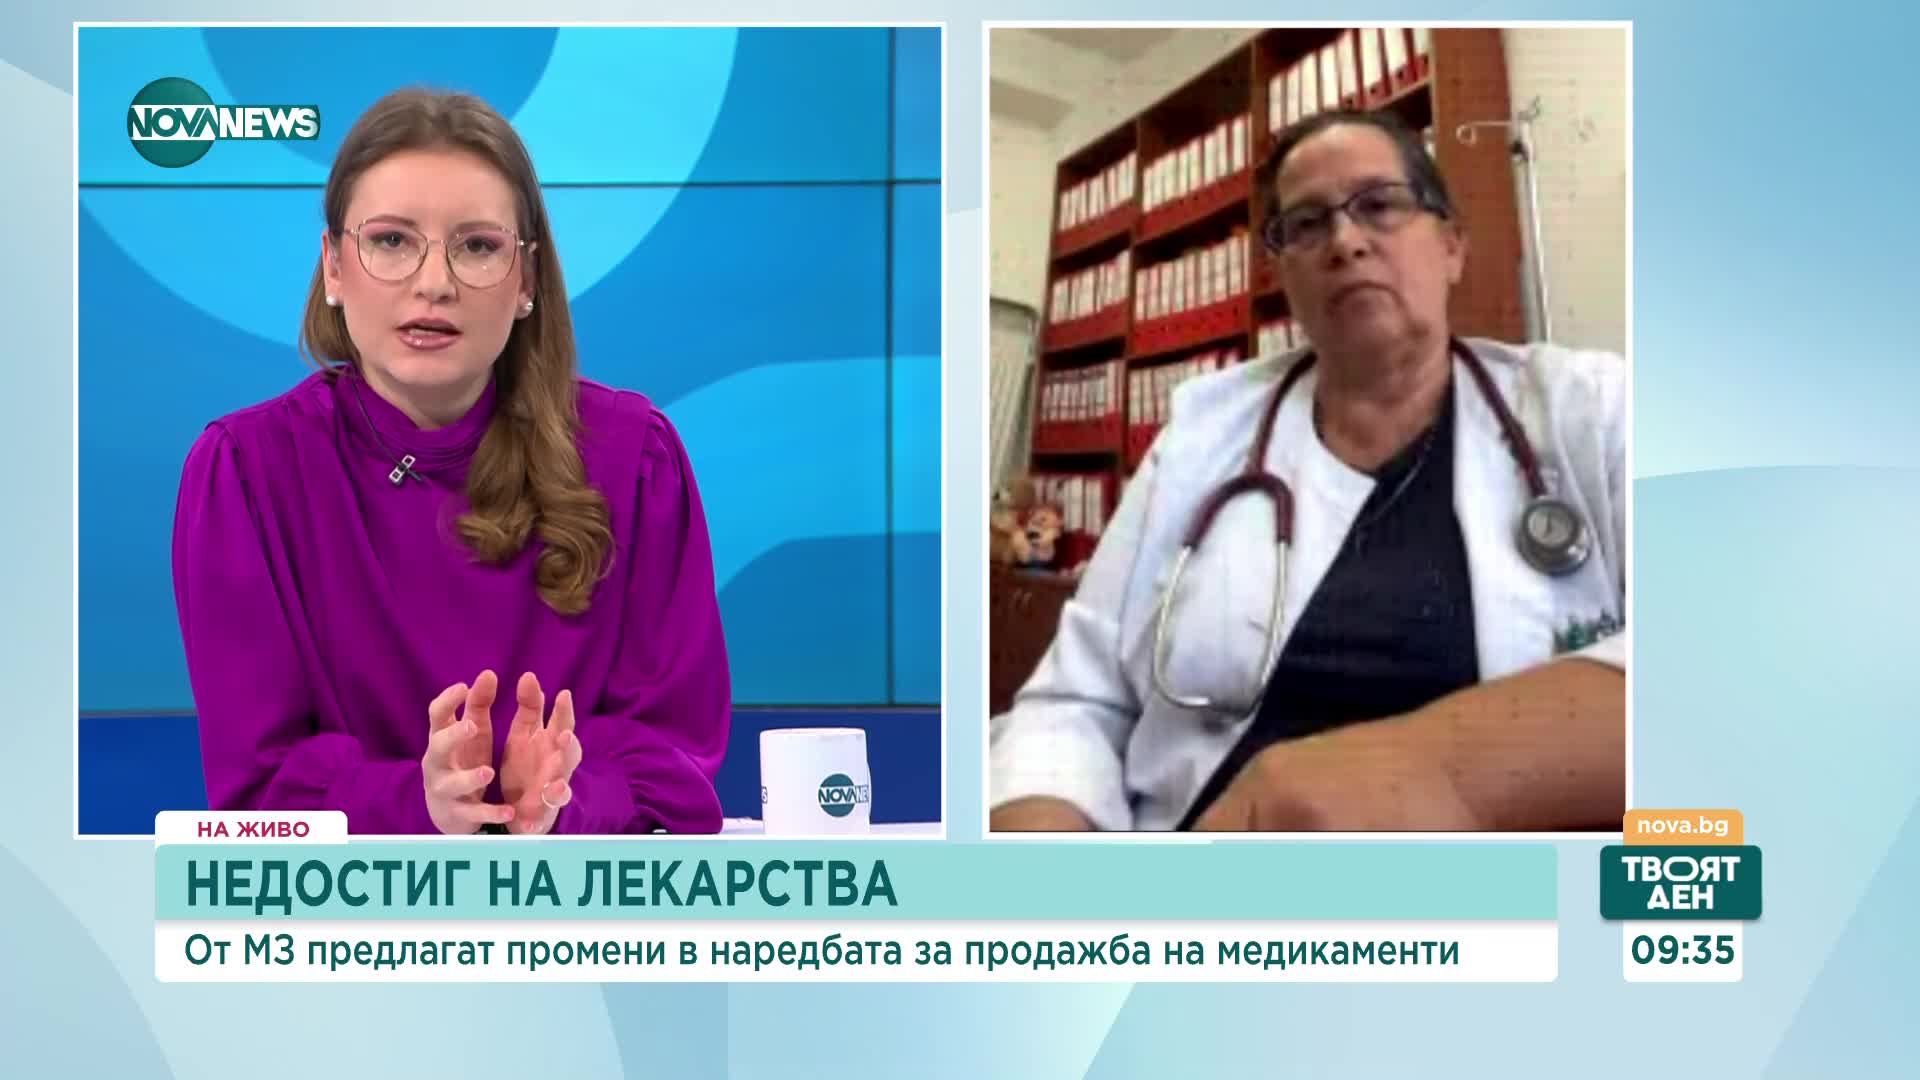 Д-р Николова призова да не се продават антибиотици без рецепта